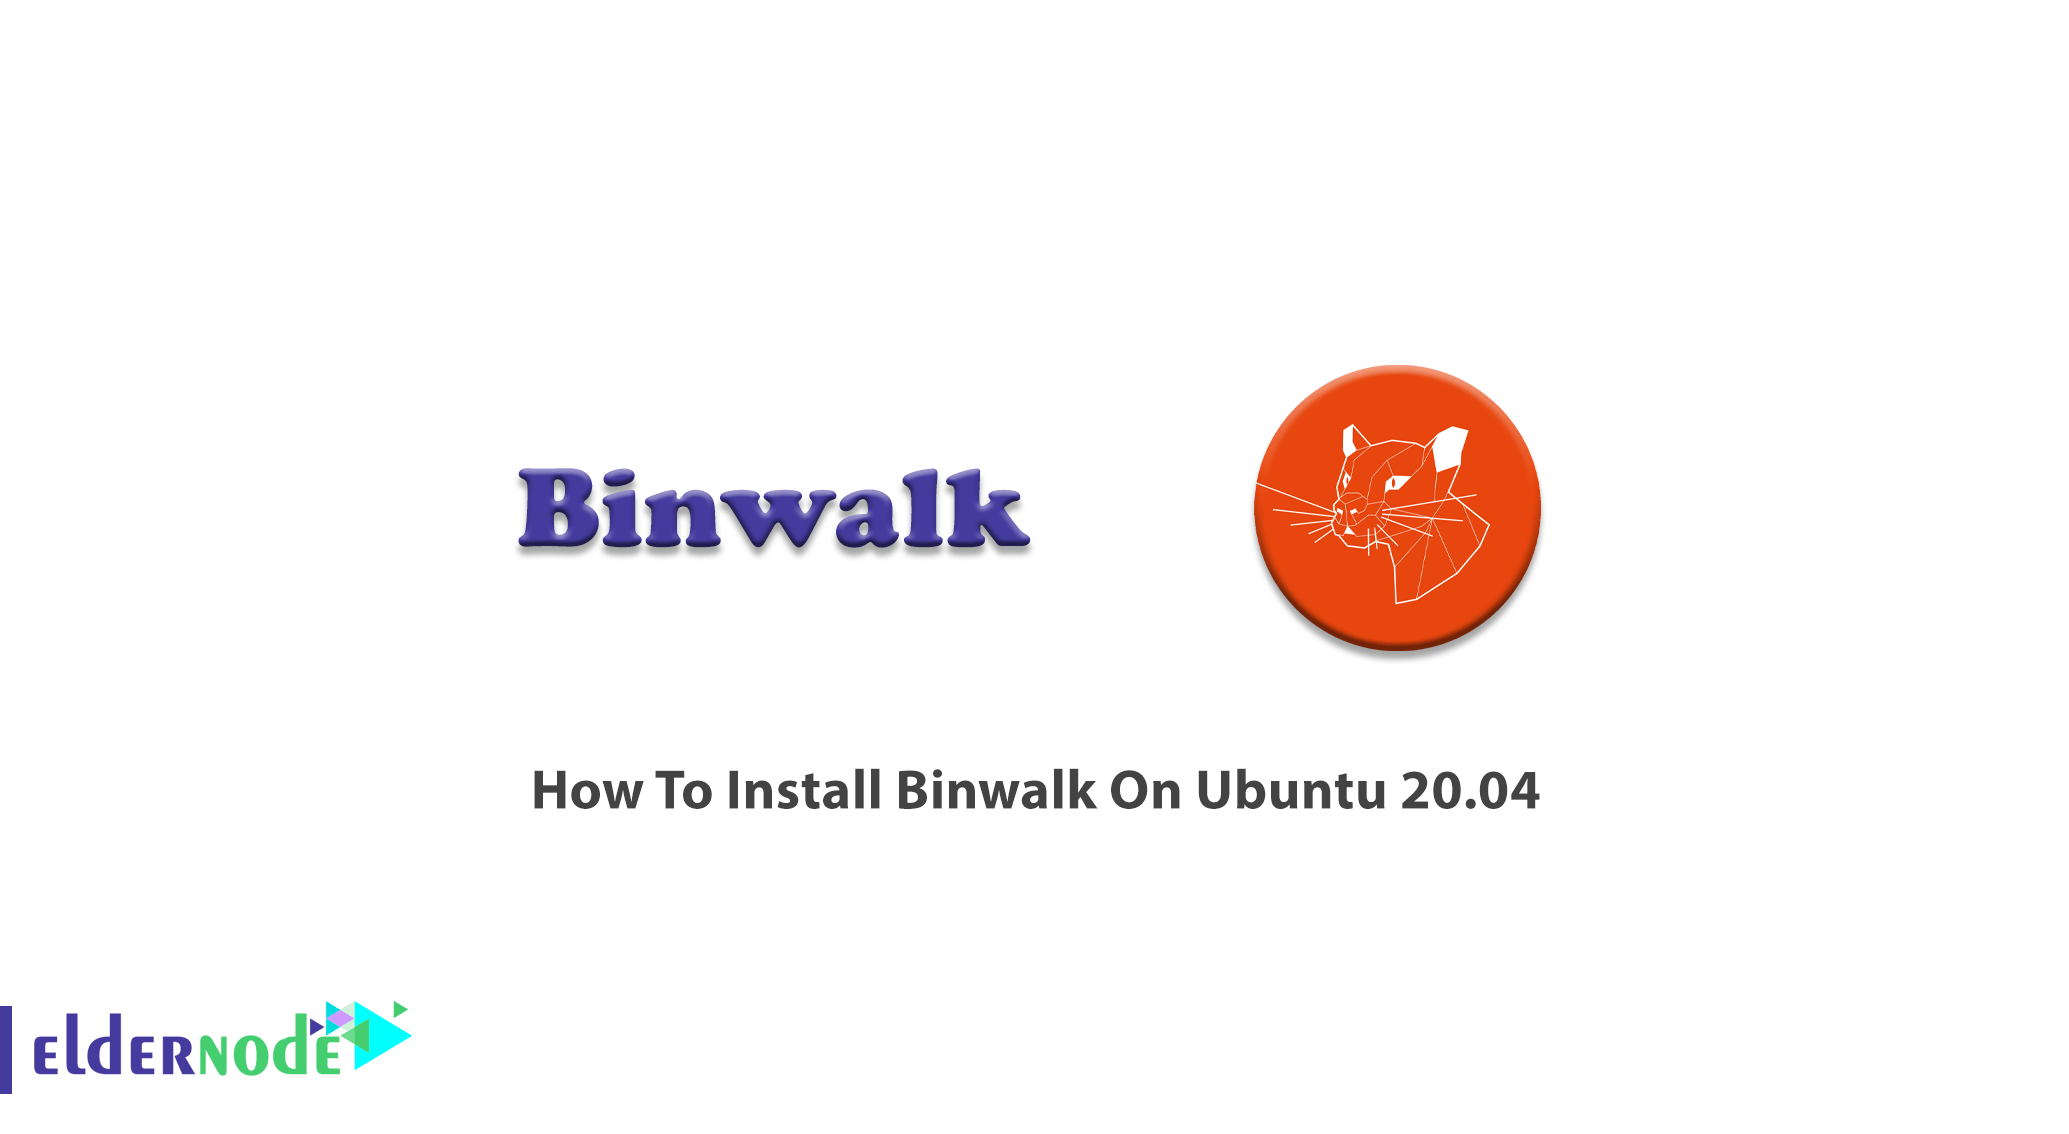 How To Install Binwalk On Ubuntu 20.04